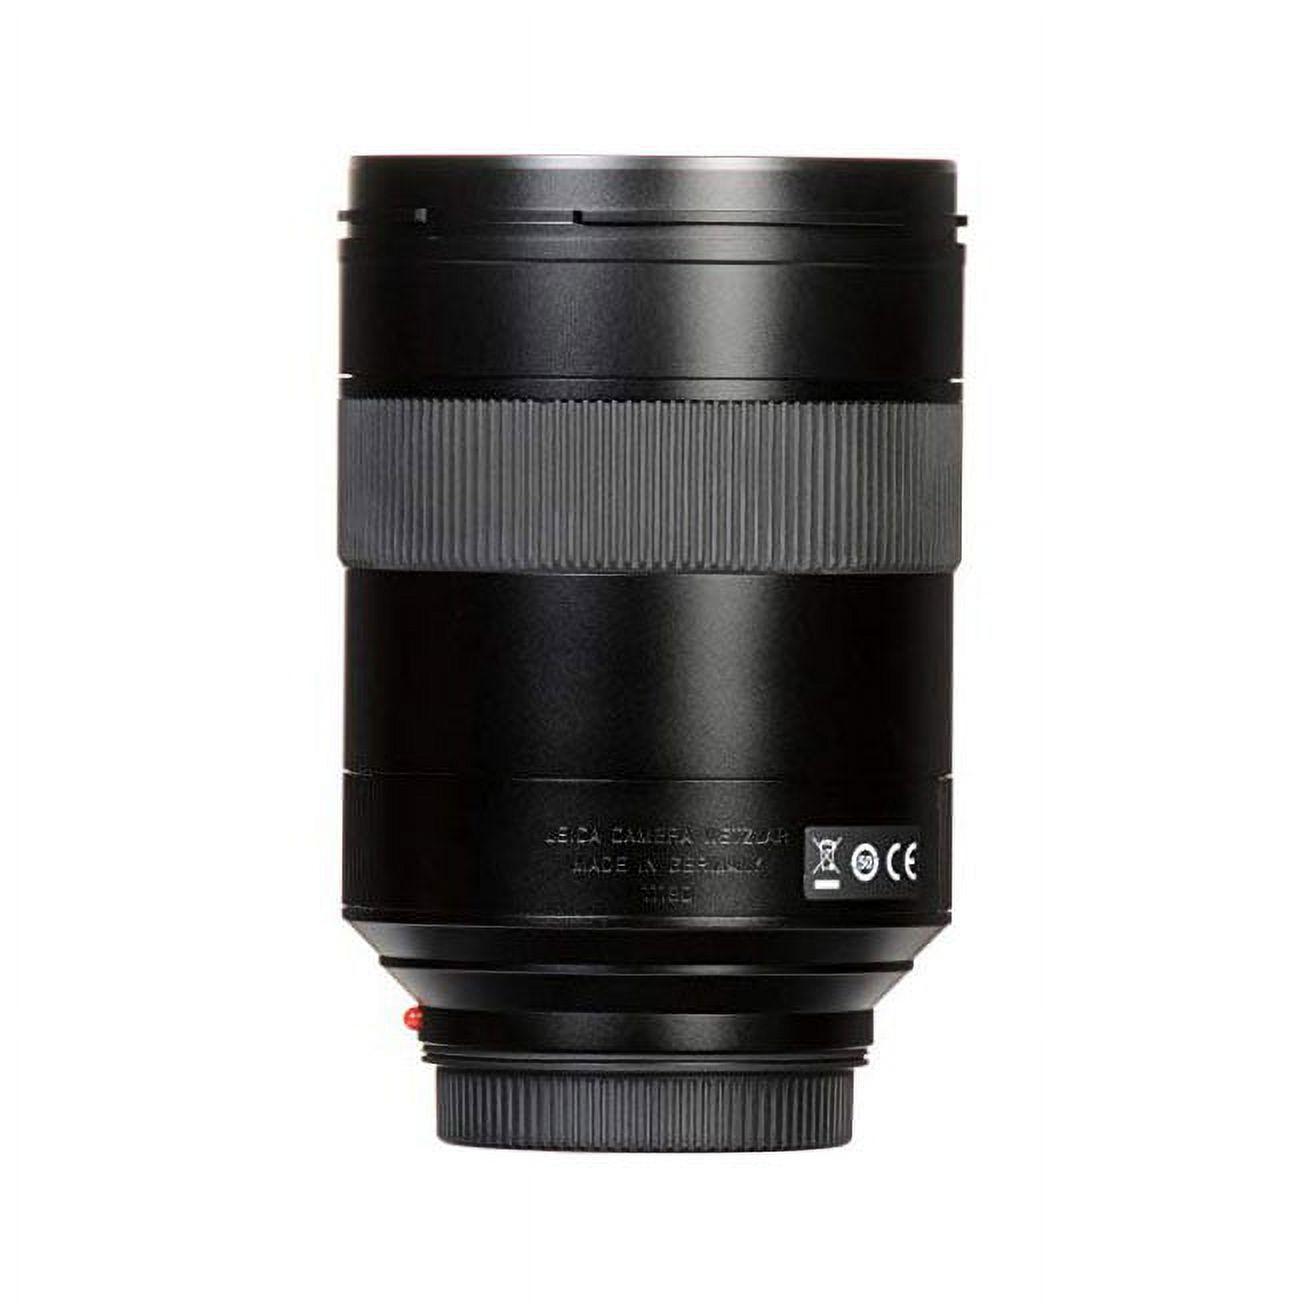 Leica SL2 Mirrorless Digital Camera with Summilux-SL 50mm f/1.4 Aspherical Lens - image 4 of 5